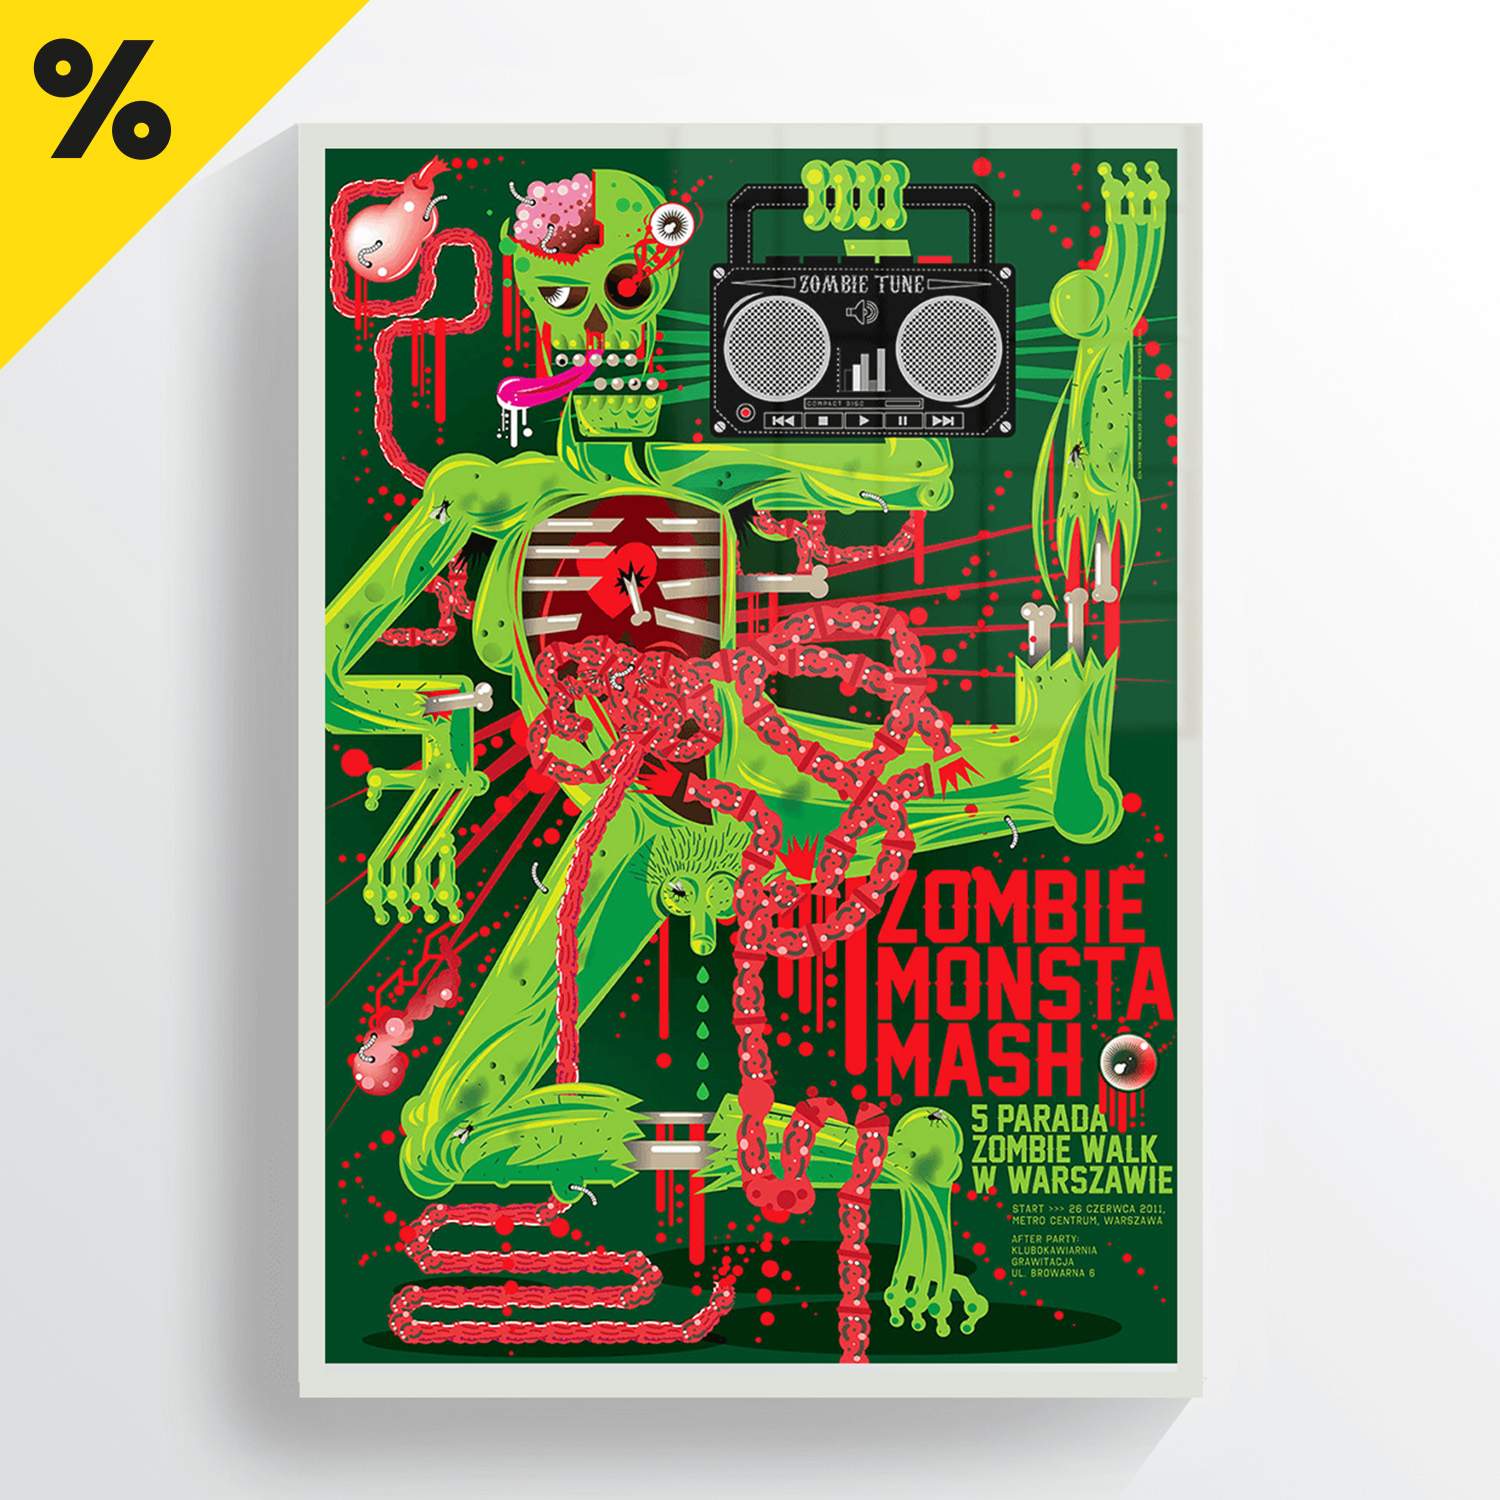 Plakat: "Zombie Monsta Mash"